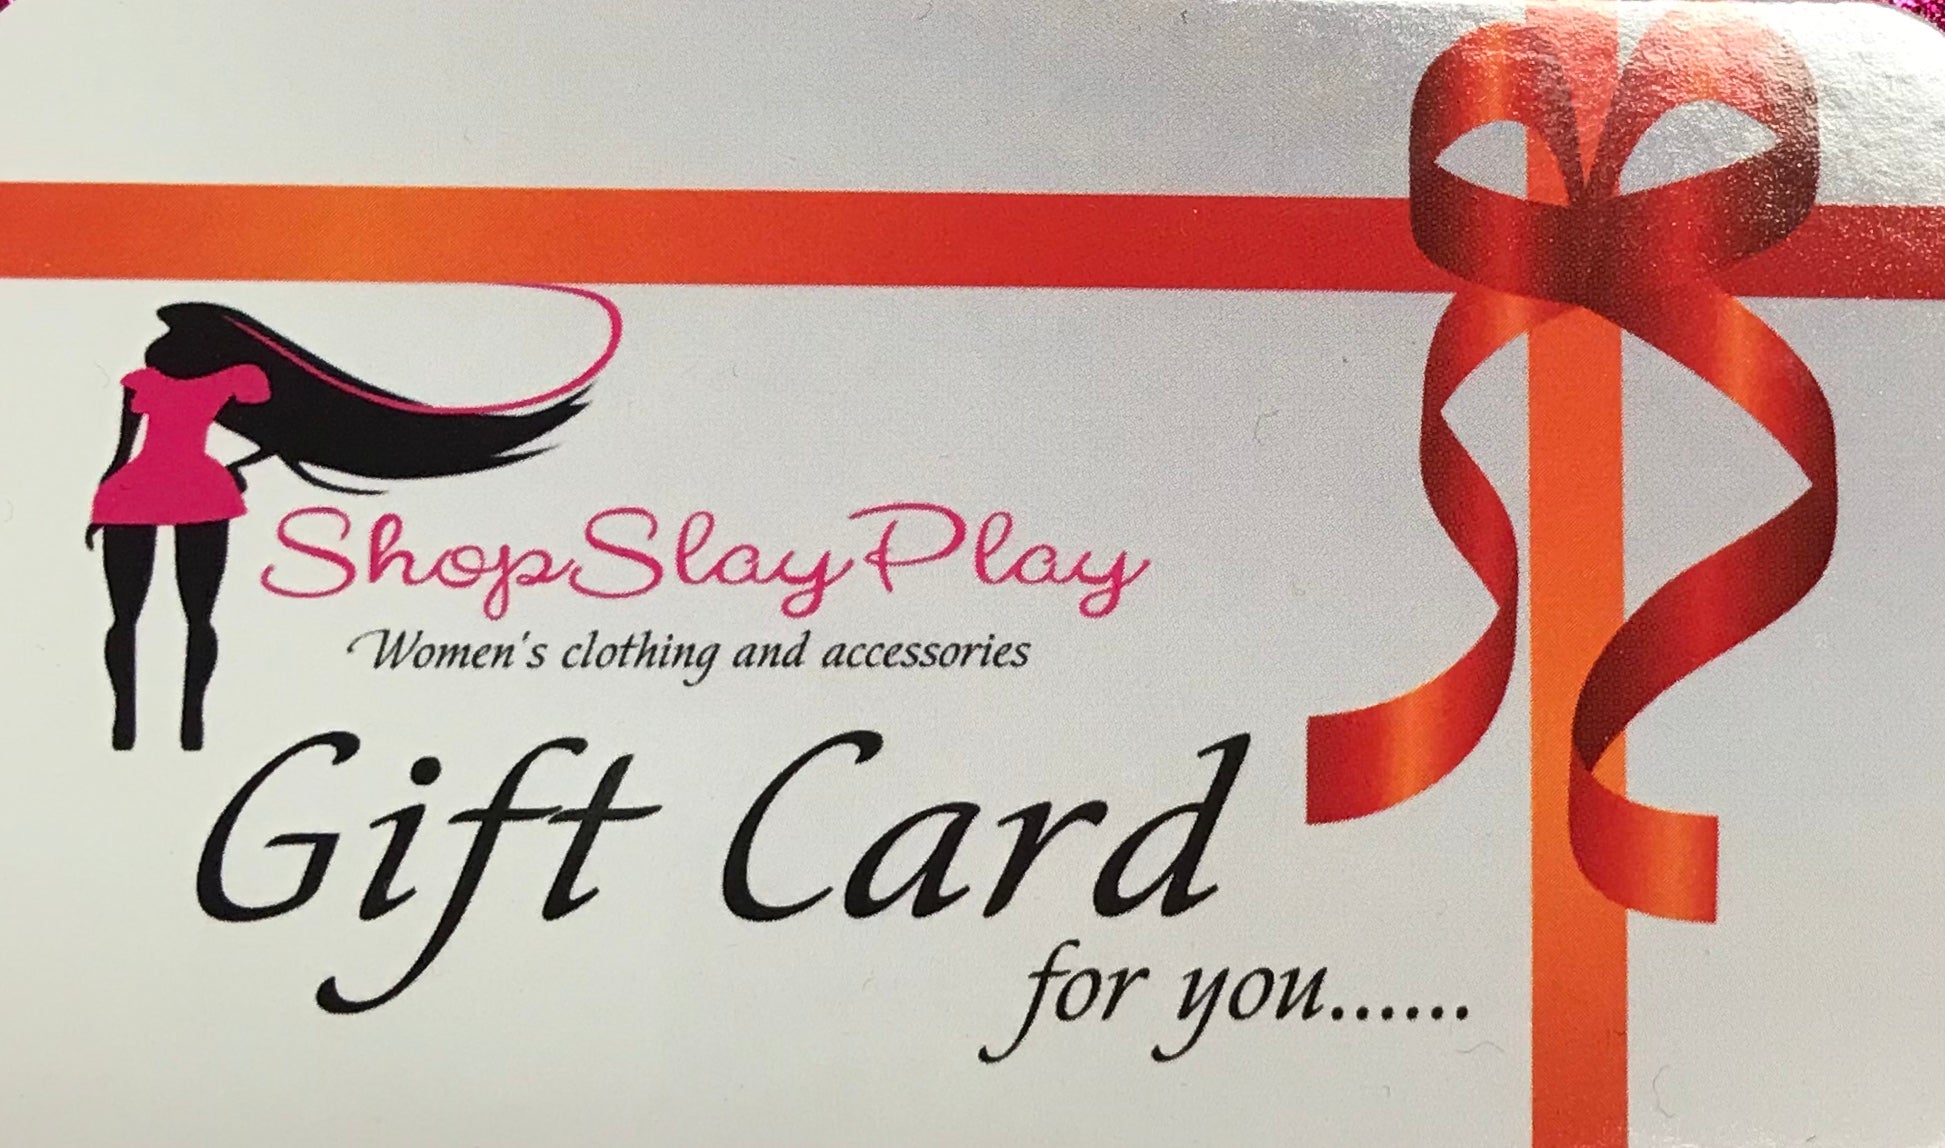 Gift Card - Gift Card